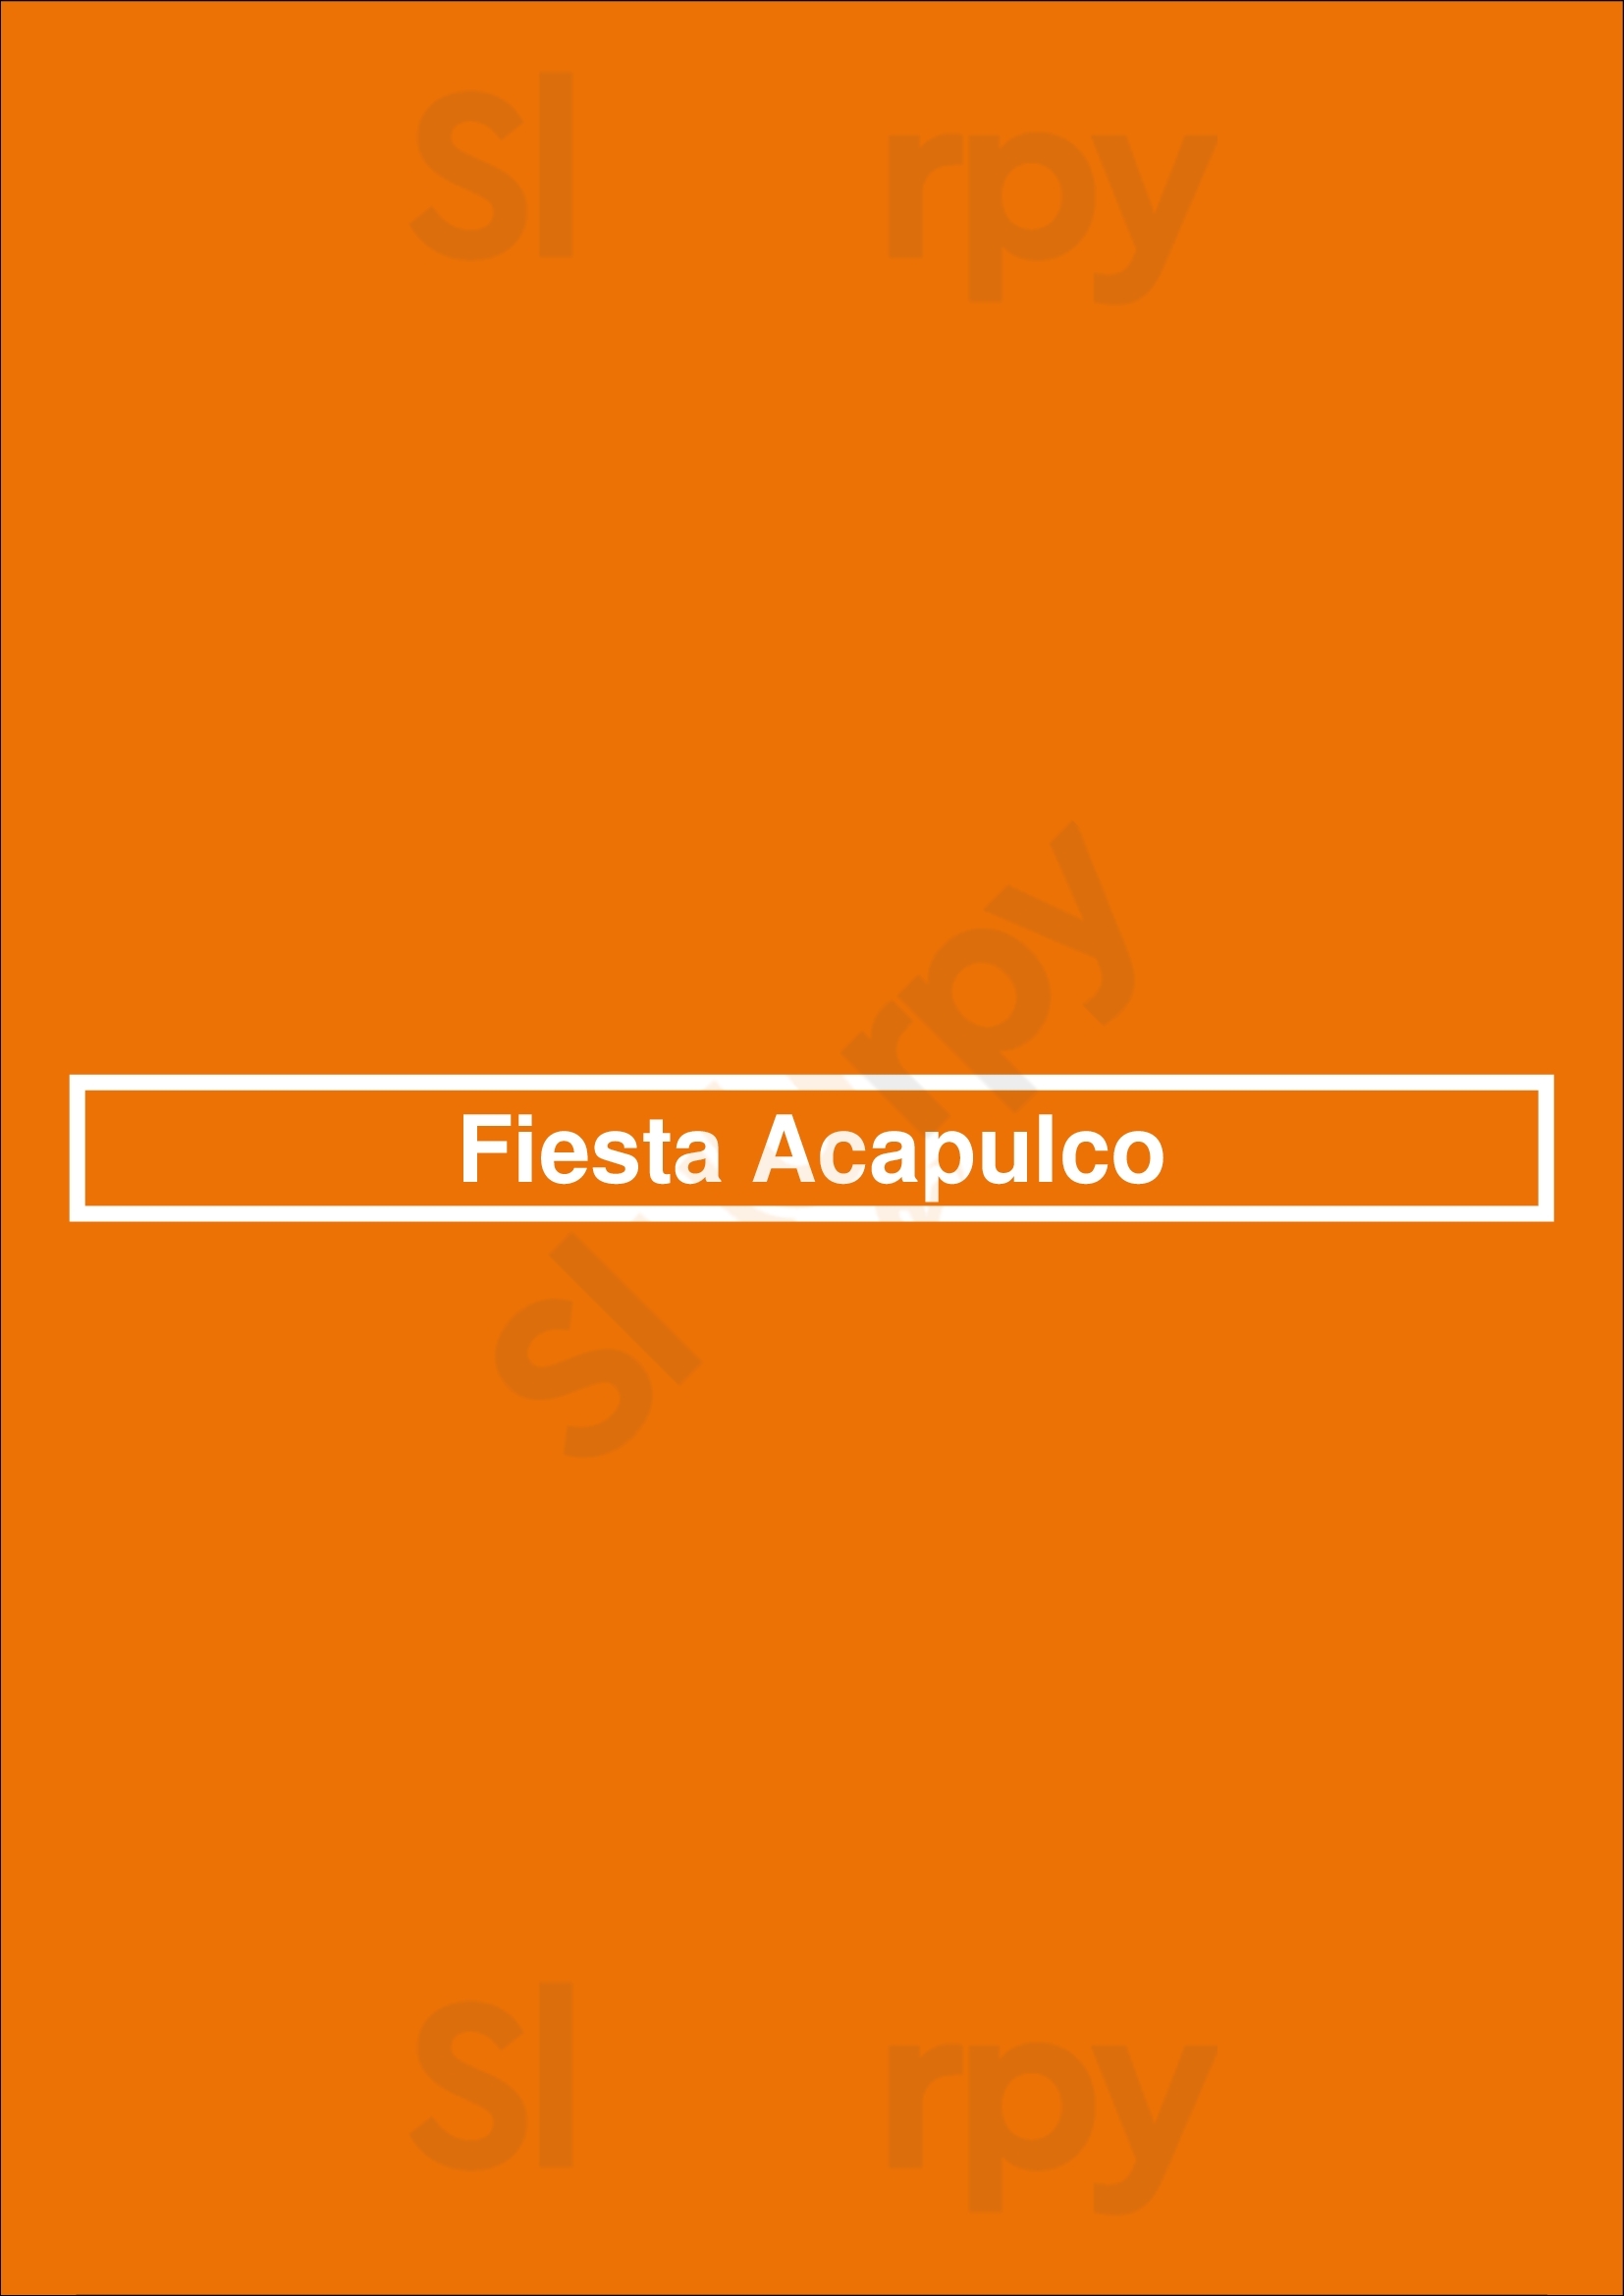 Fiesta Acapulco Philadelphia Menu - 1